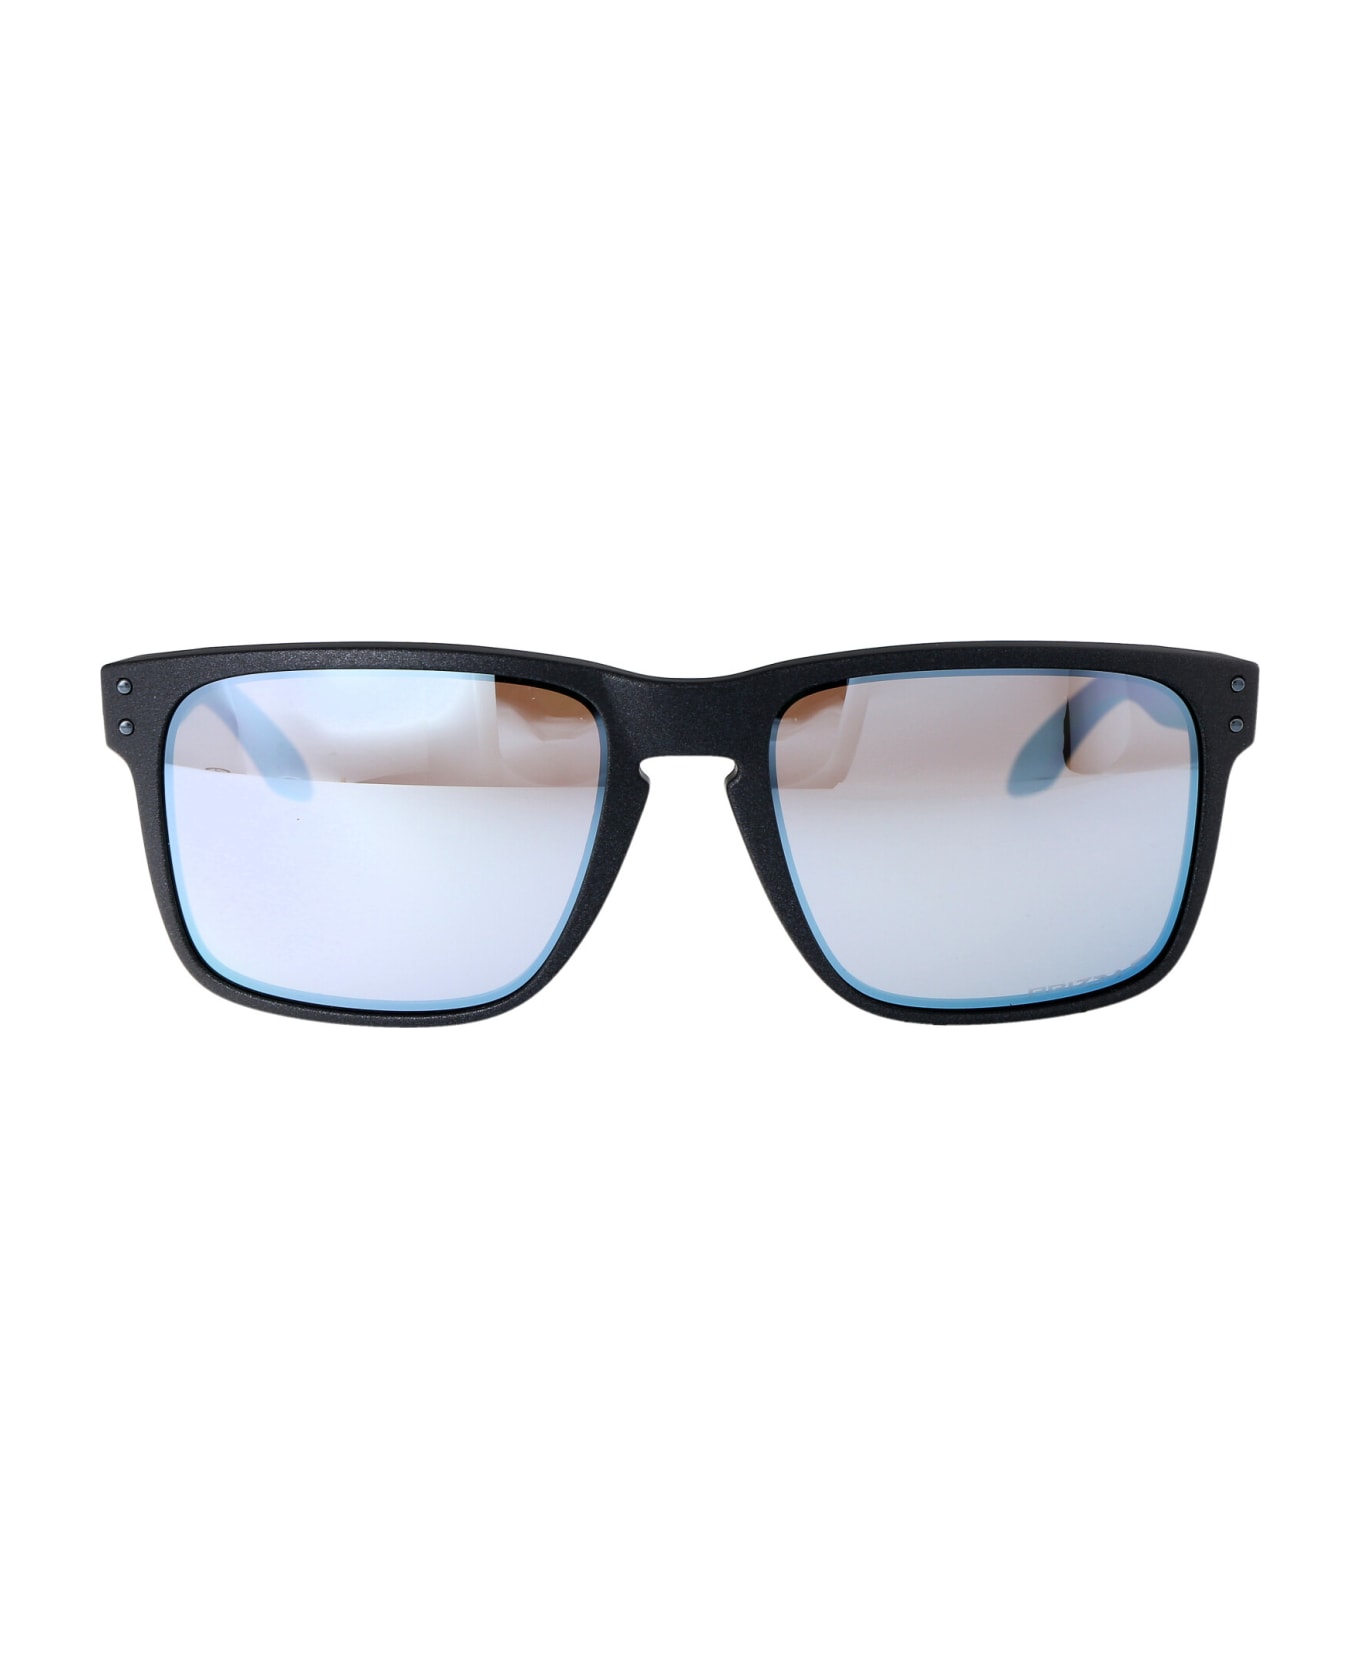 Oakley Holbrook Xl Sunglasses - Black